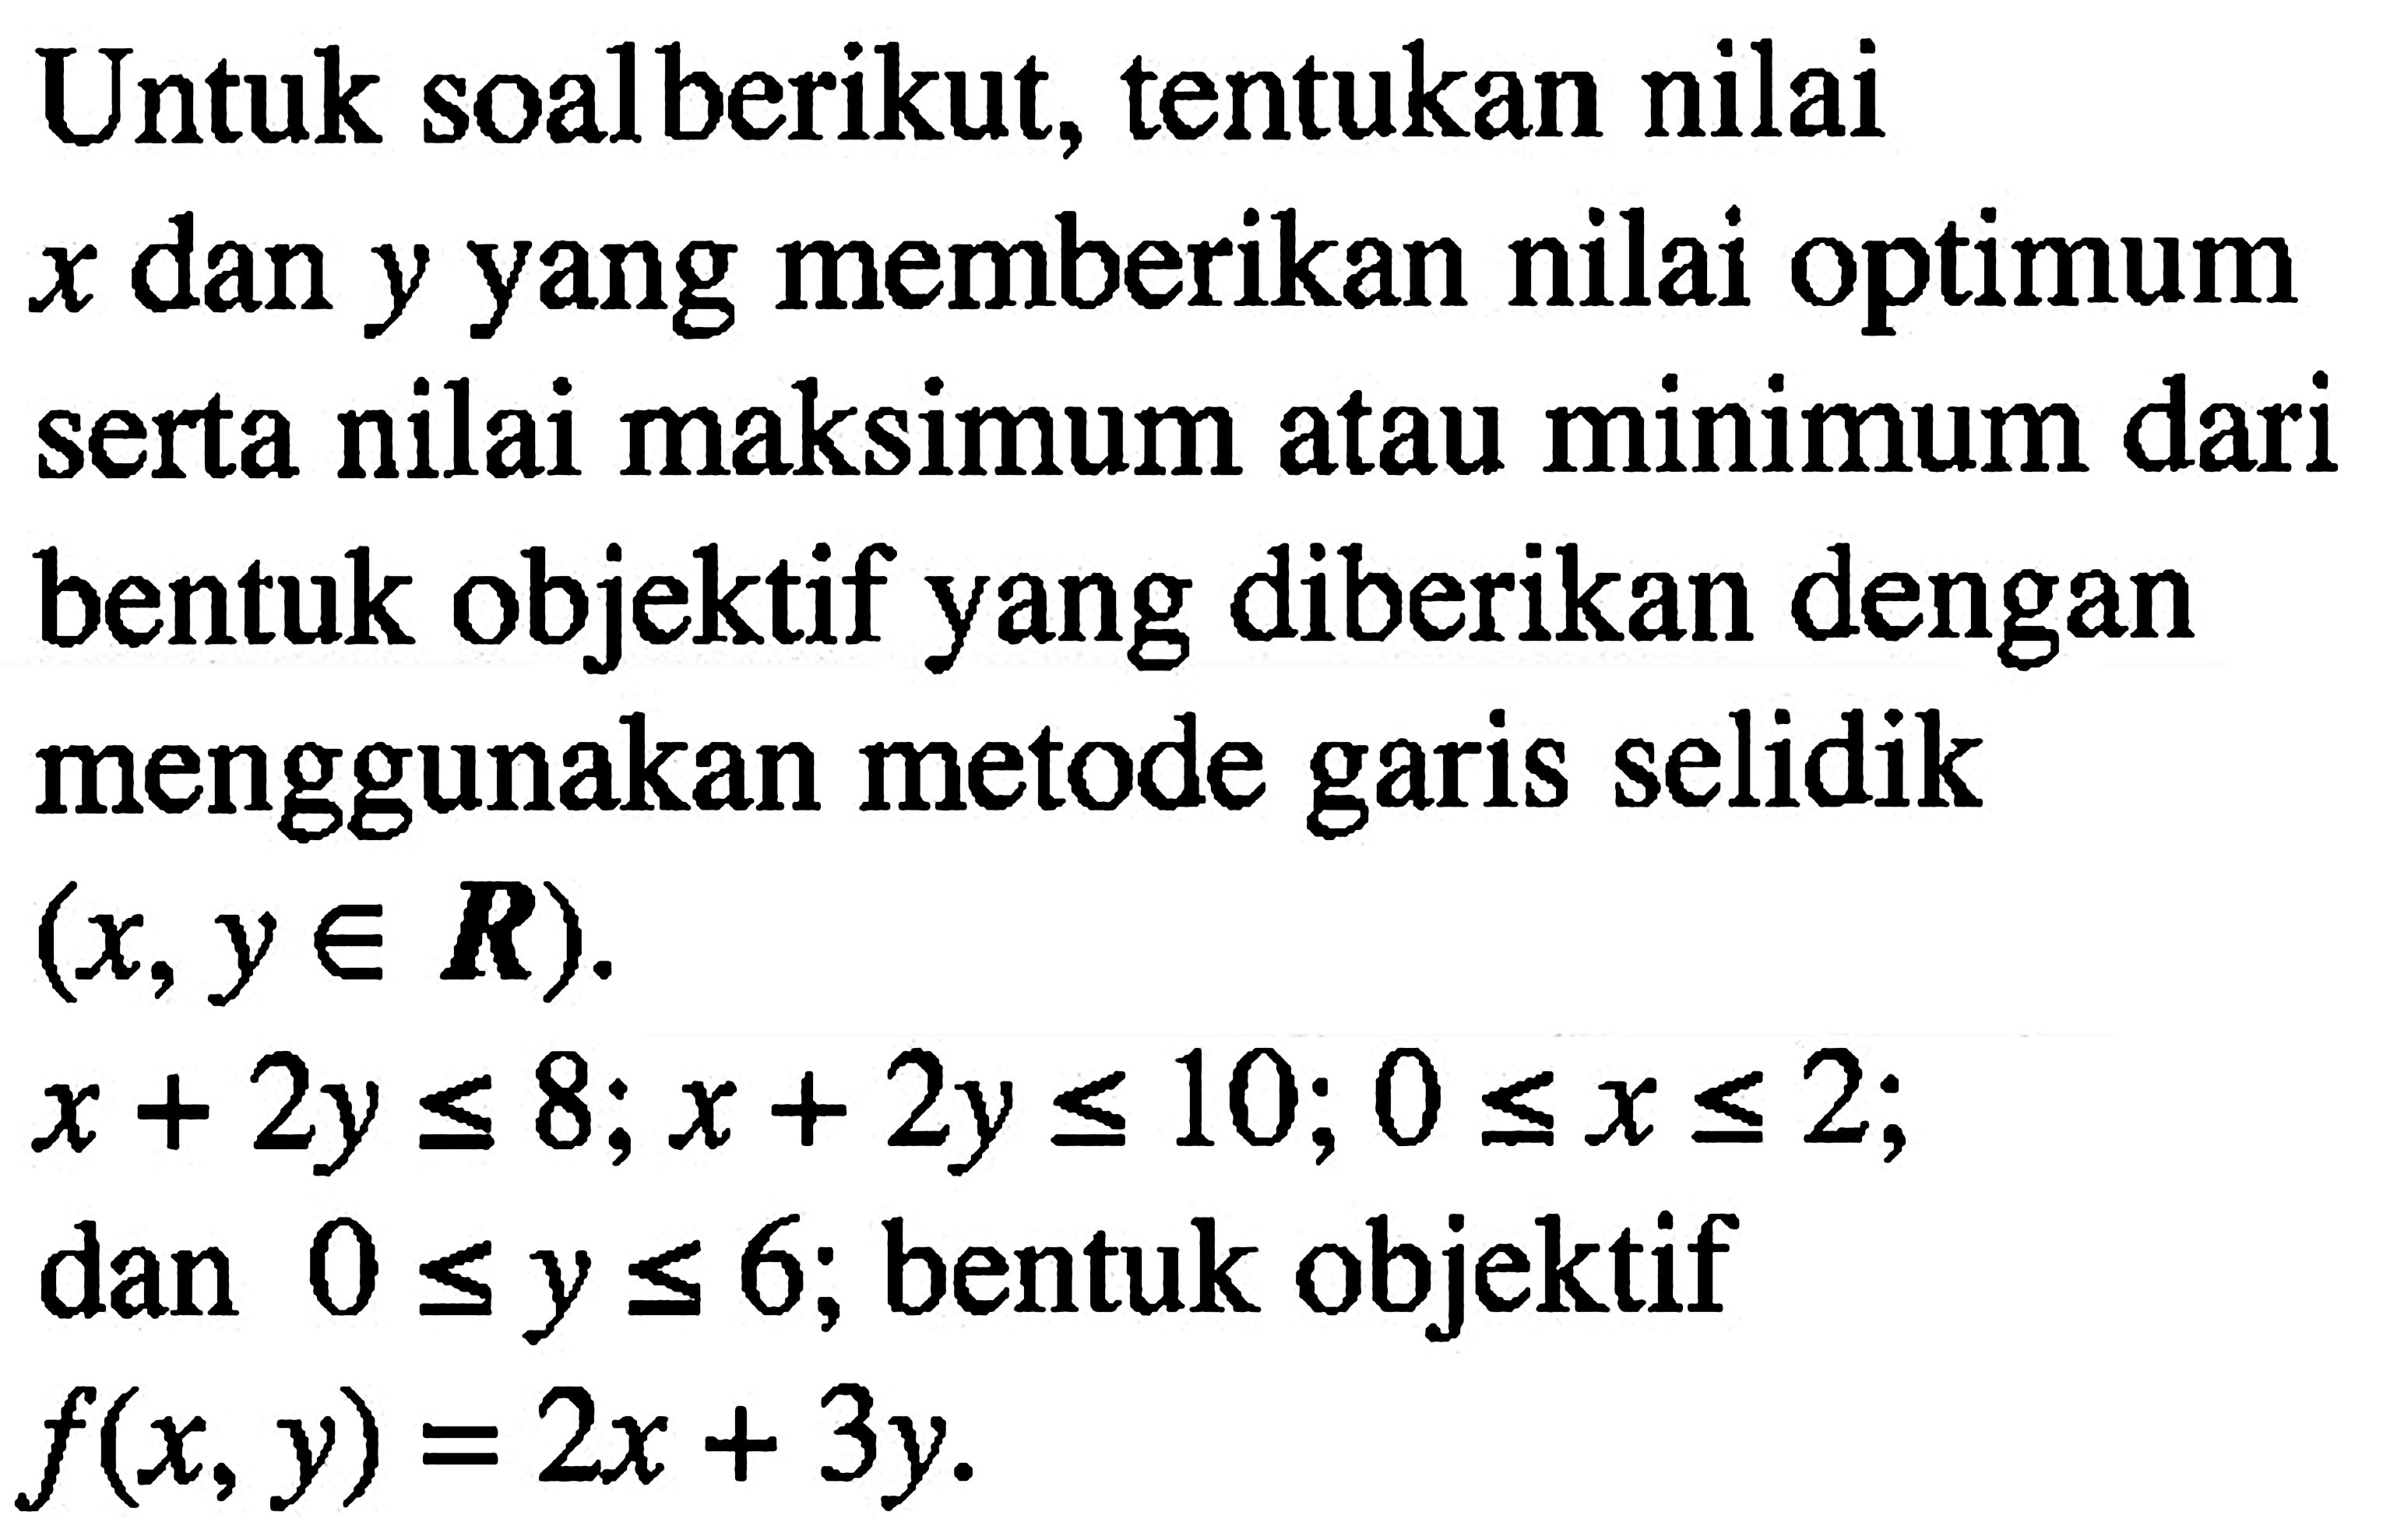 Untuk soal berikut, tentukan nilai x dan y yang memberikan nilai optimum serta nilai maksimum atau minimum dari bentuk objektif yang diberikan dengan menggunakan metode garis selidik (x,y e R). x+2y<=8; x+2y<=10; 0<=x<=2; dan 0<=y<=6; bentuk objektif f(x,y)=2x+3y.